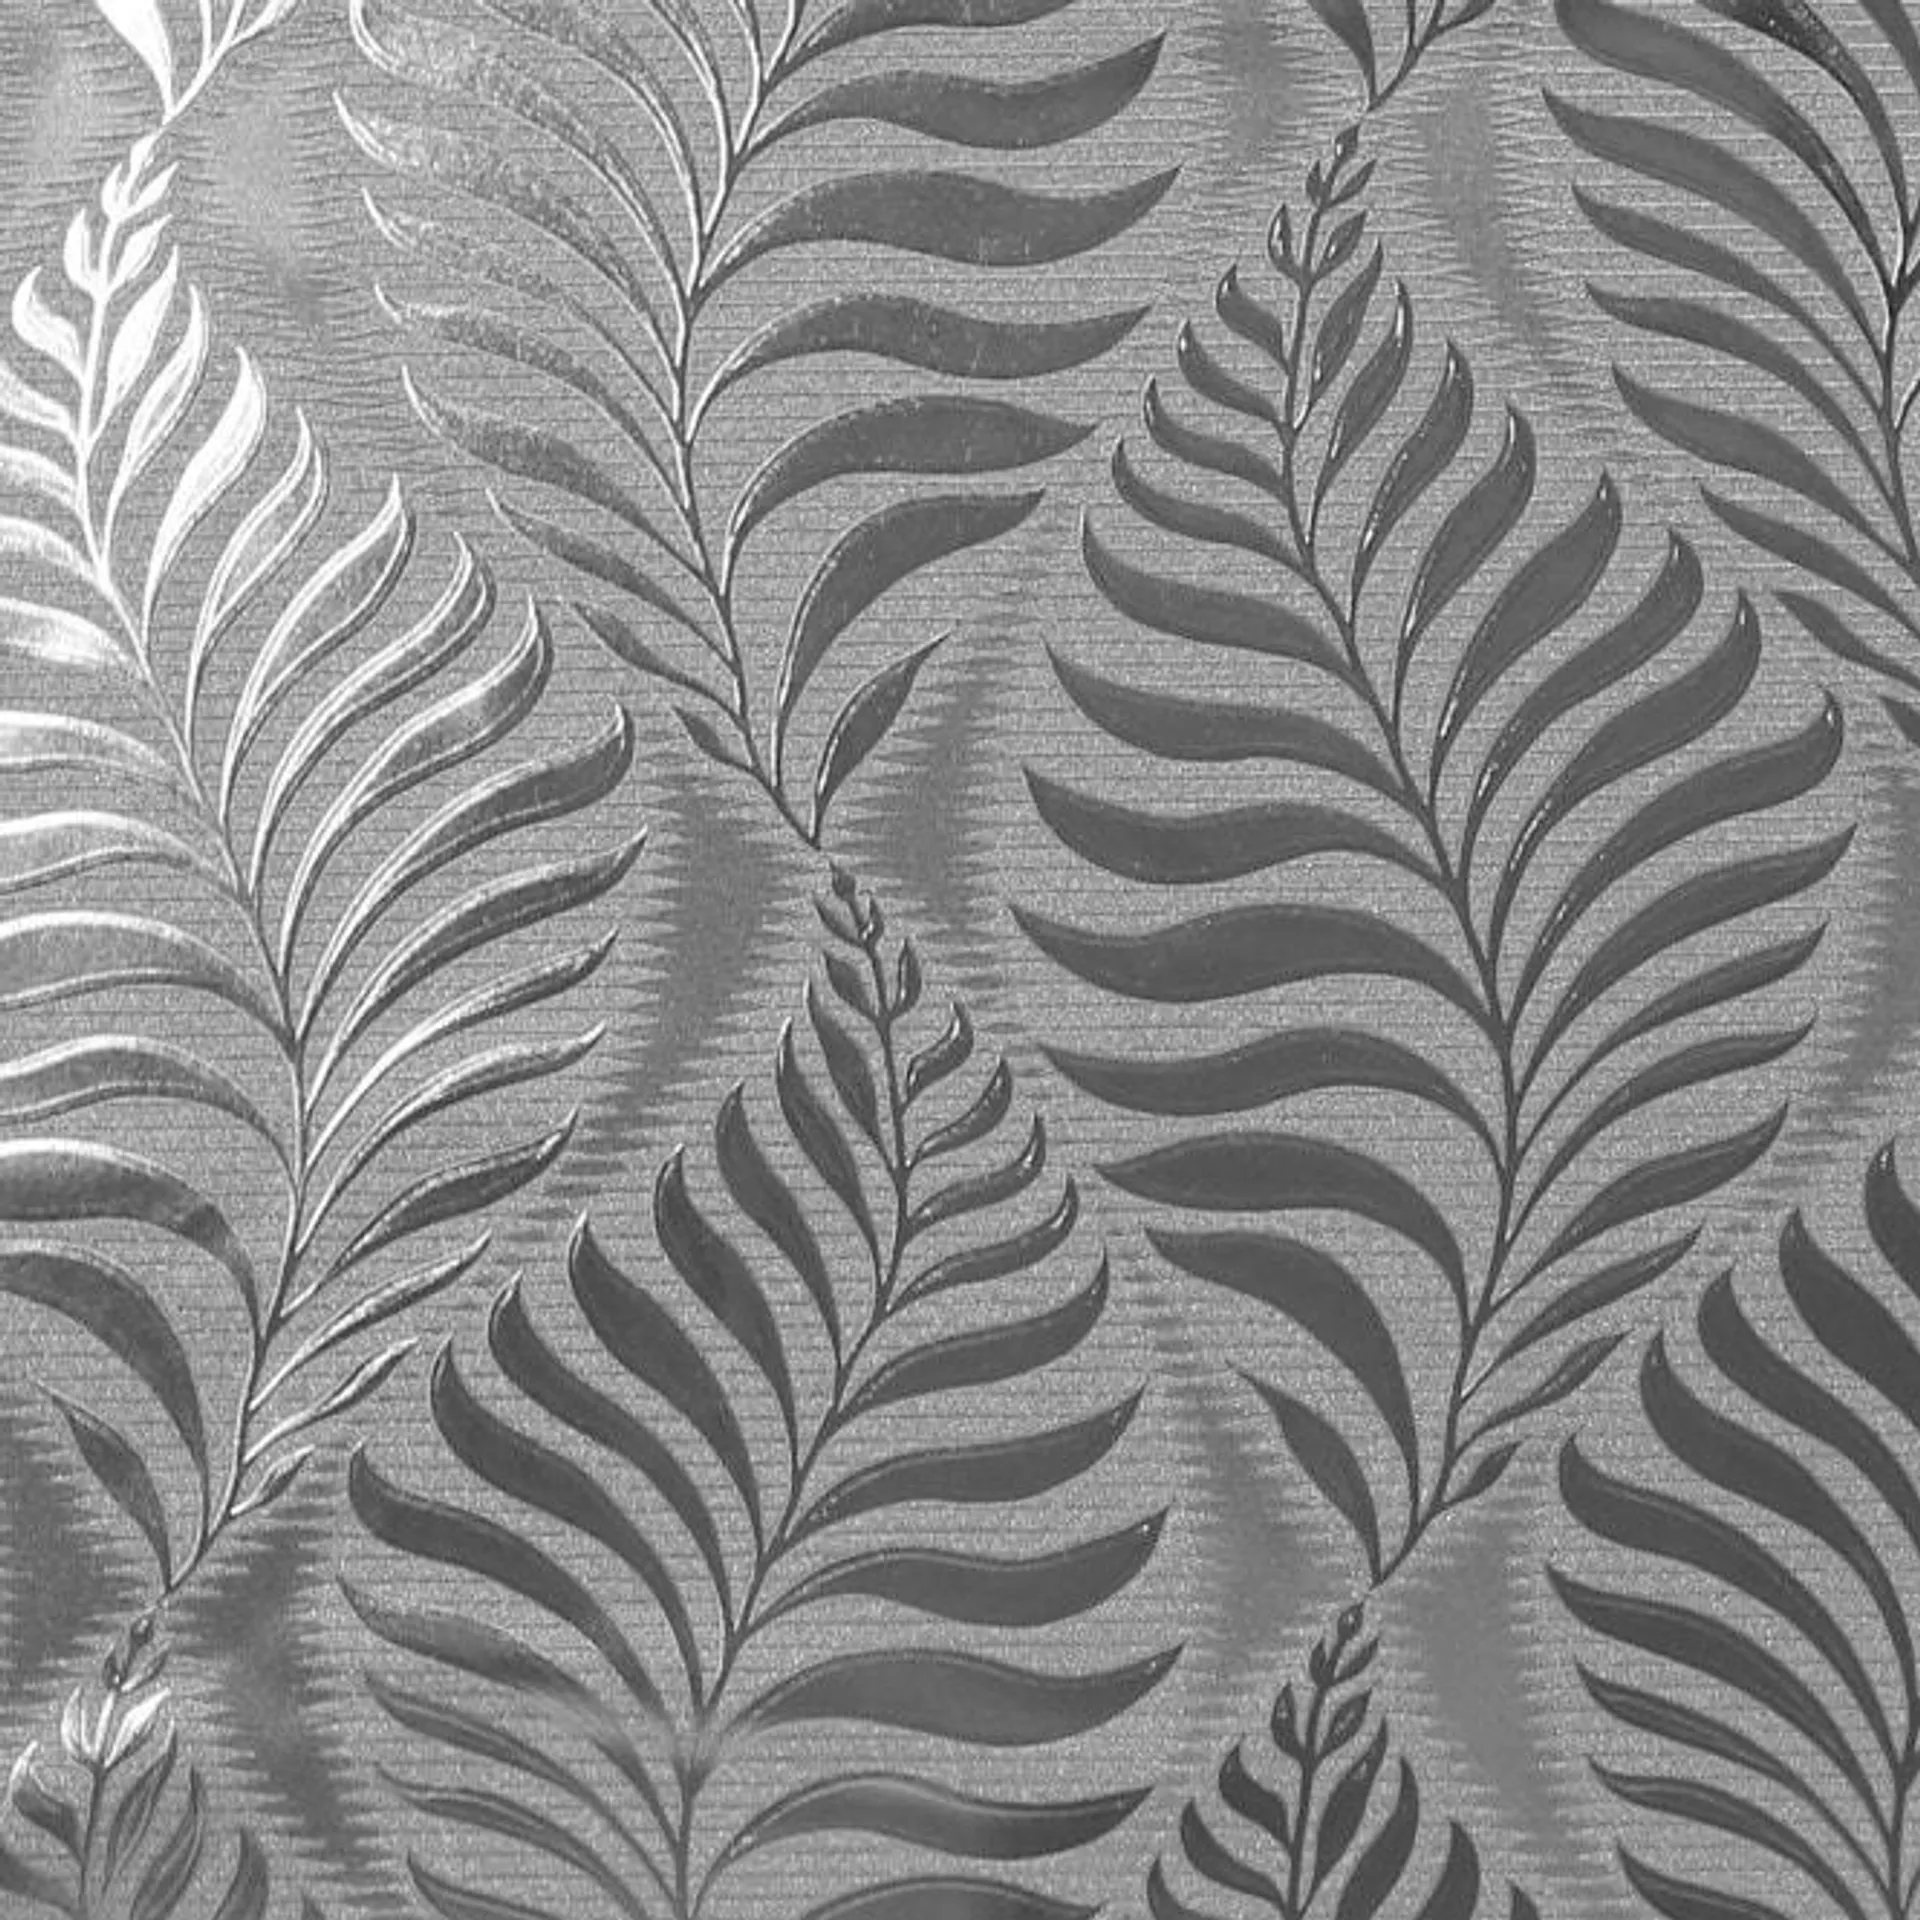 Foil Embossed Leaf Wallpaper in Silver